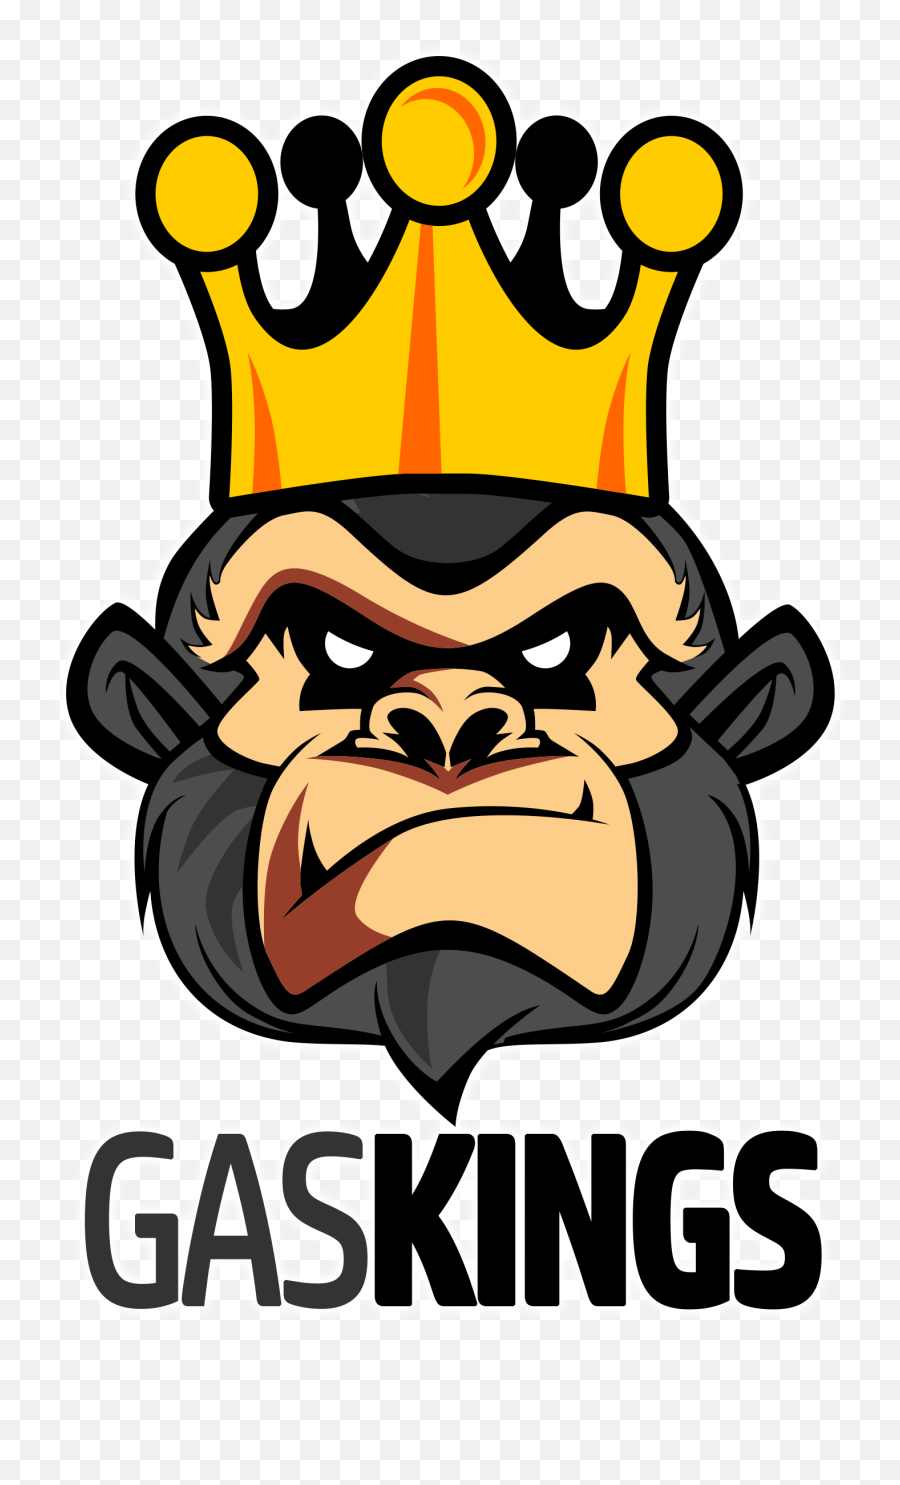 Gaskings Accused Of Fraud Youtube Channel Deleted - Gas Kings Png,Youtube Logo Jpg